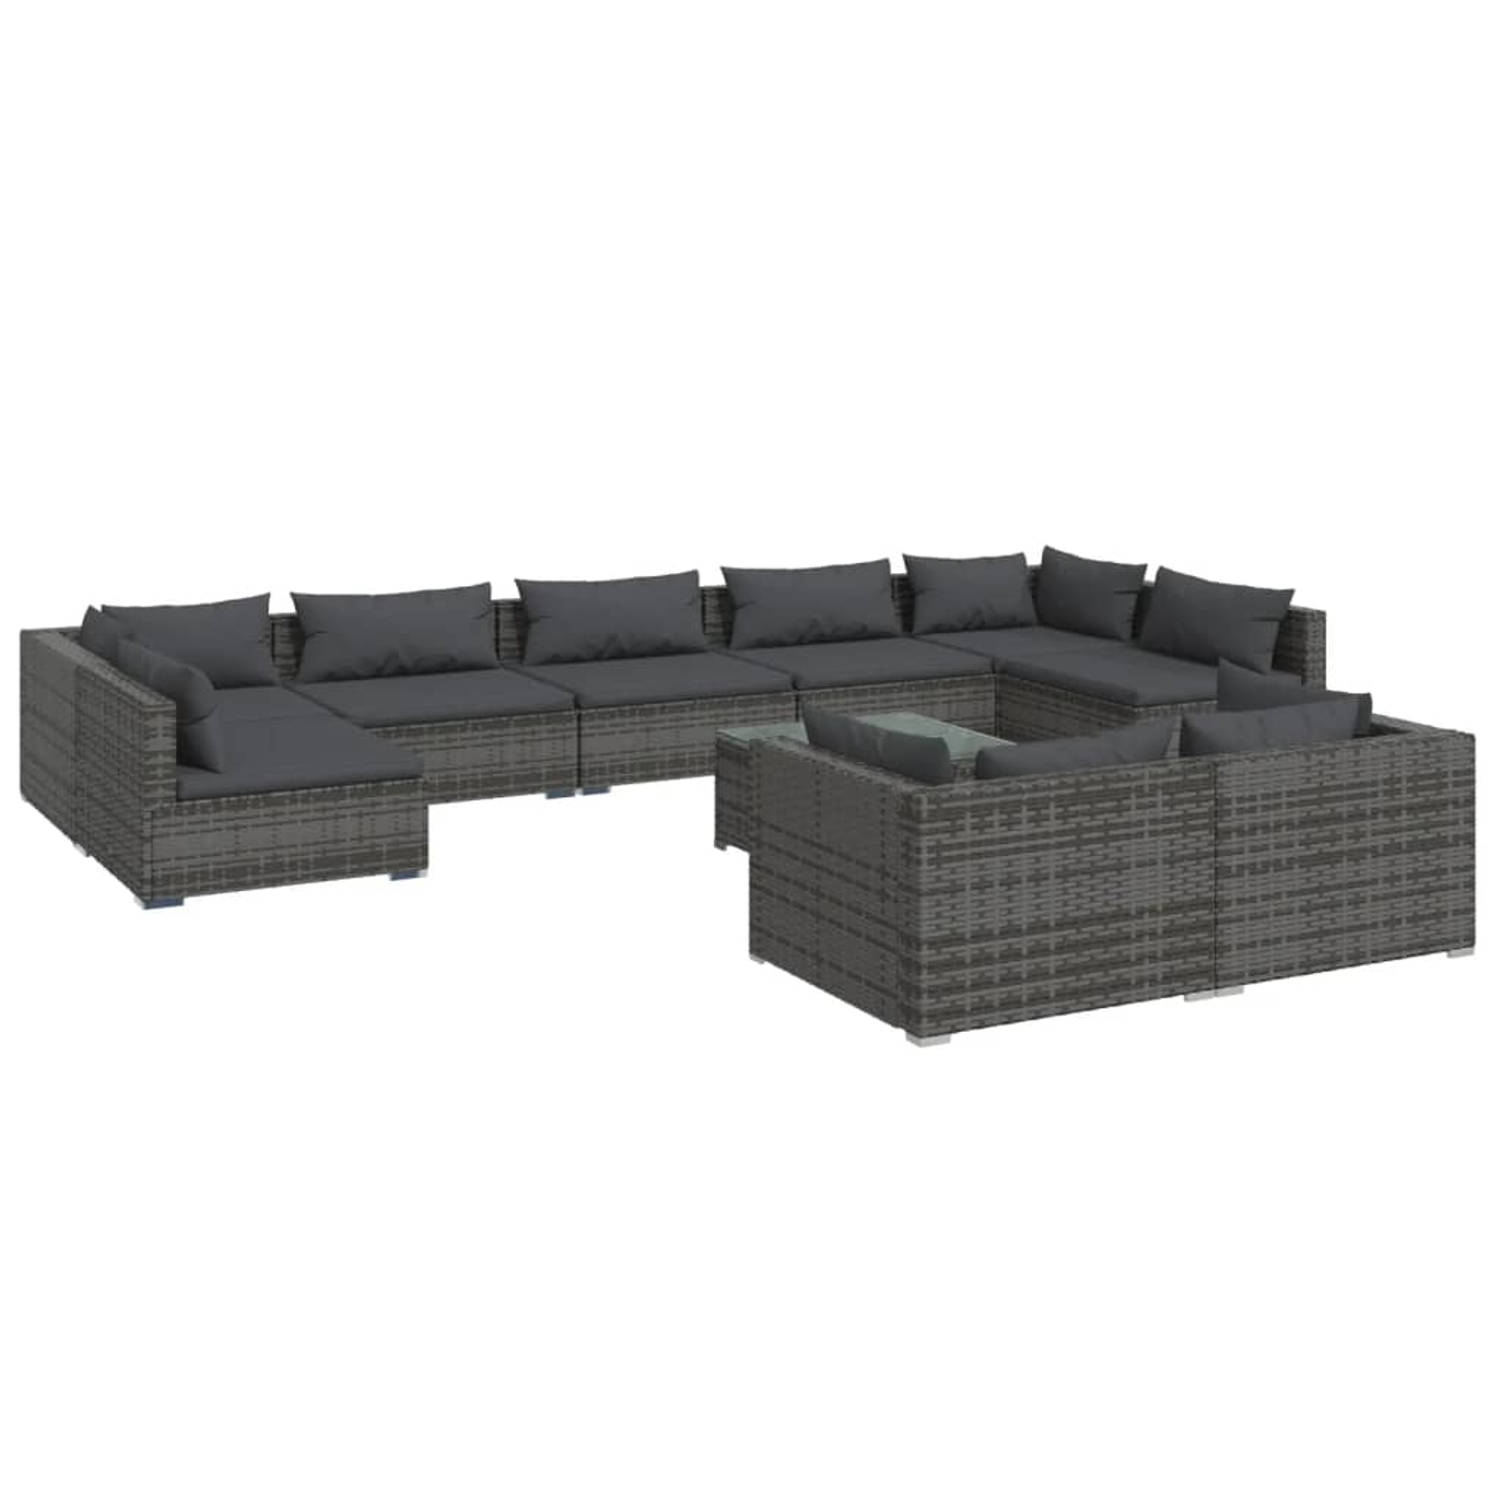 The Living Store Loungeset - Grijs PE-rattan - Modulair design - Stevig frame - Hoogwaardig materiaal - Comfortabele kussens